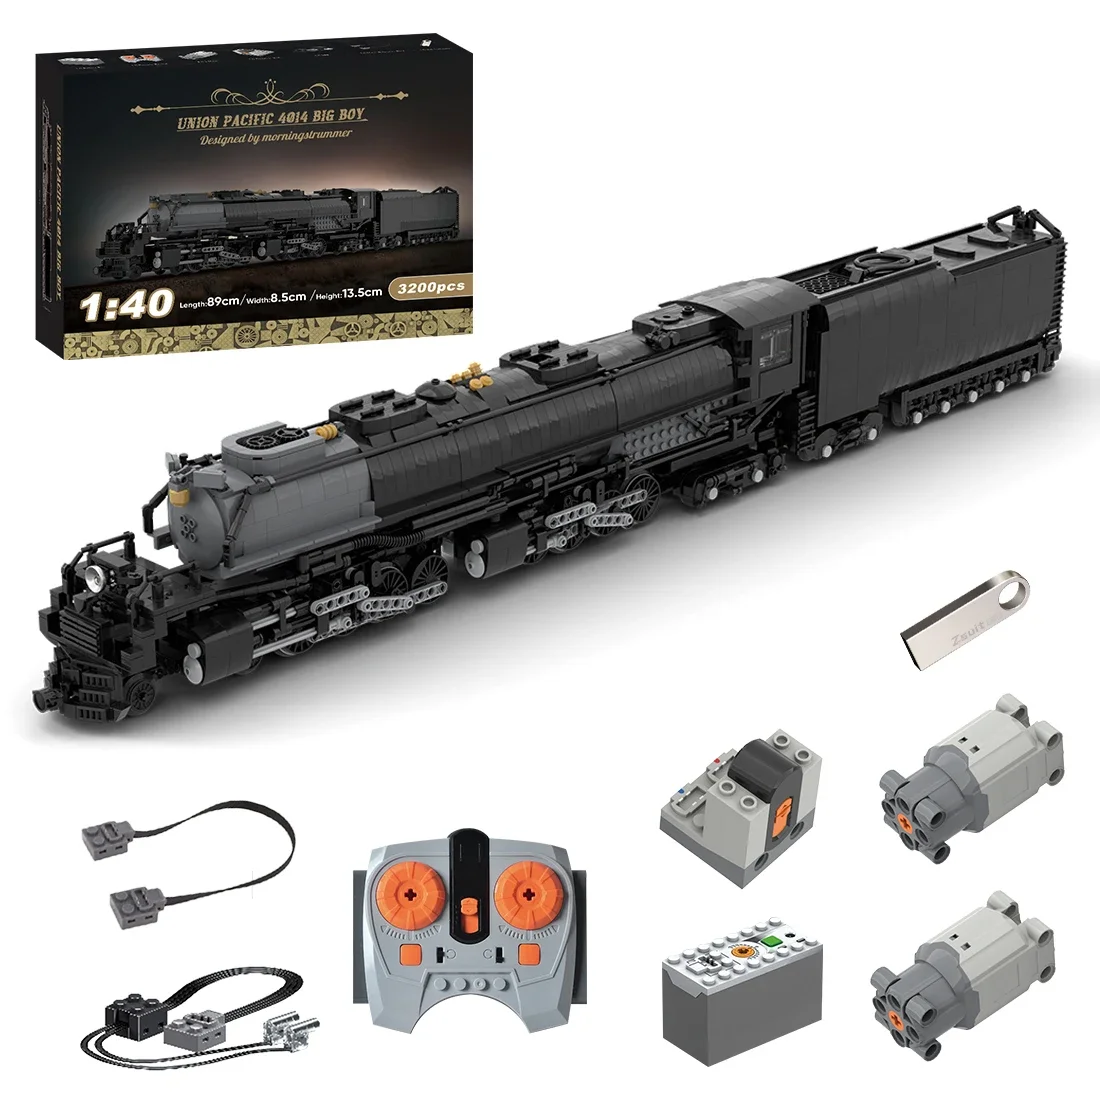 3200Pcs+ MOC-19554 1/40 Union Pacific 4014 Big Boy RC Train Model Bricks Kit - £332.75 GBP